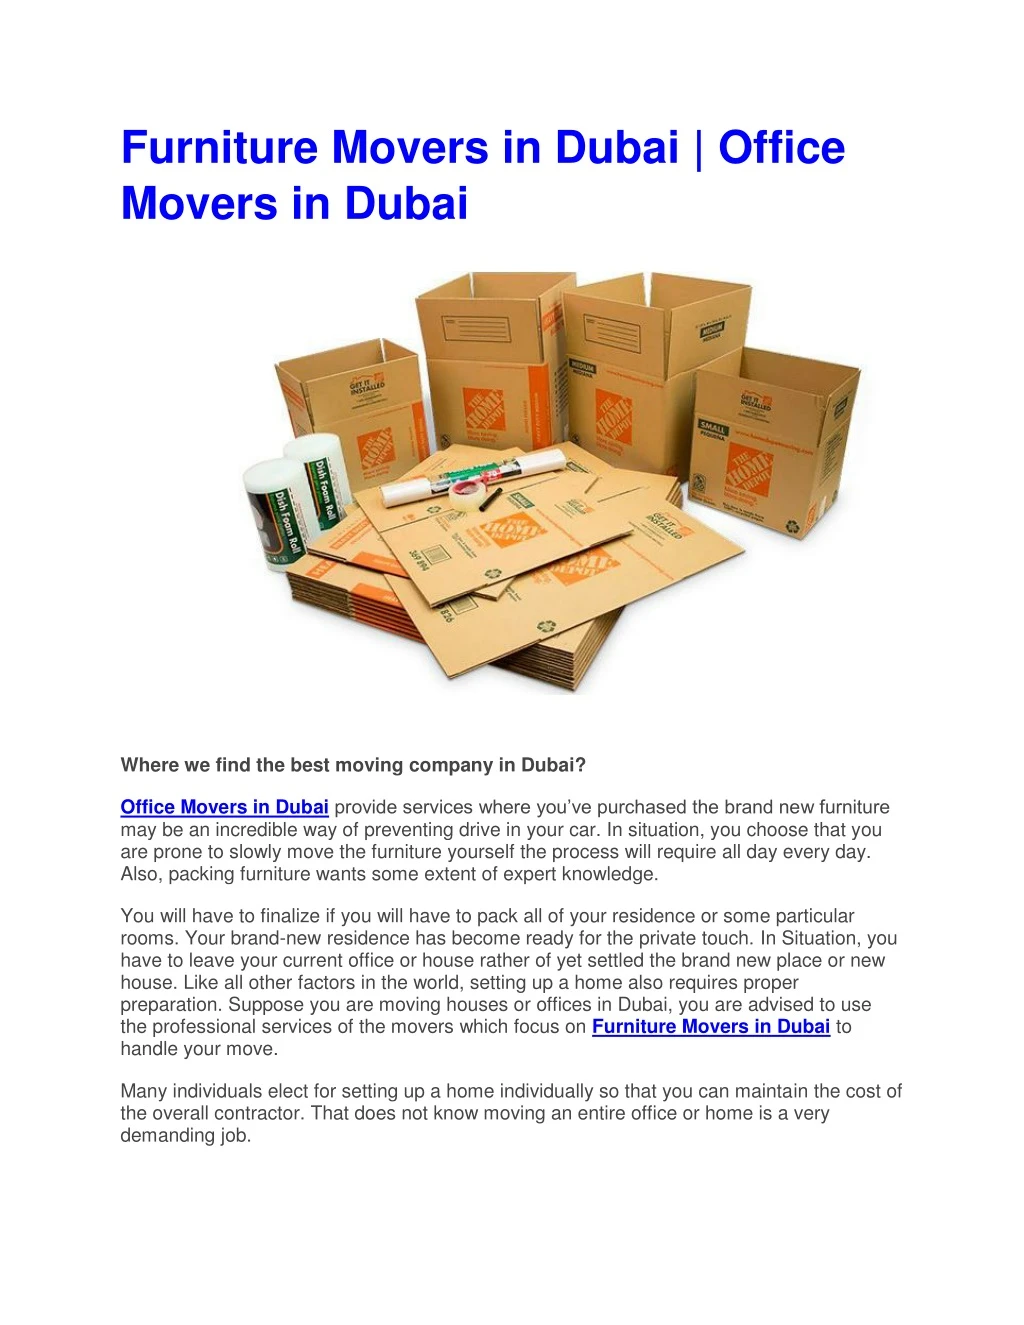 furniture movers in dubai office movers in dubai